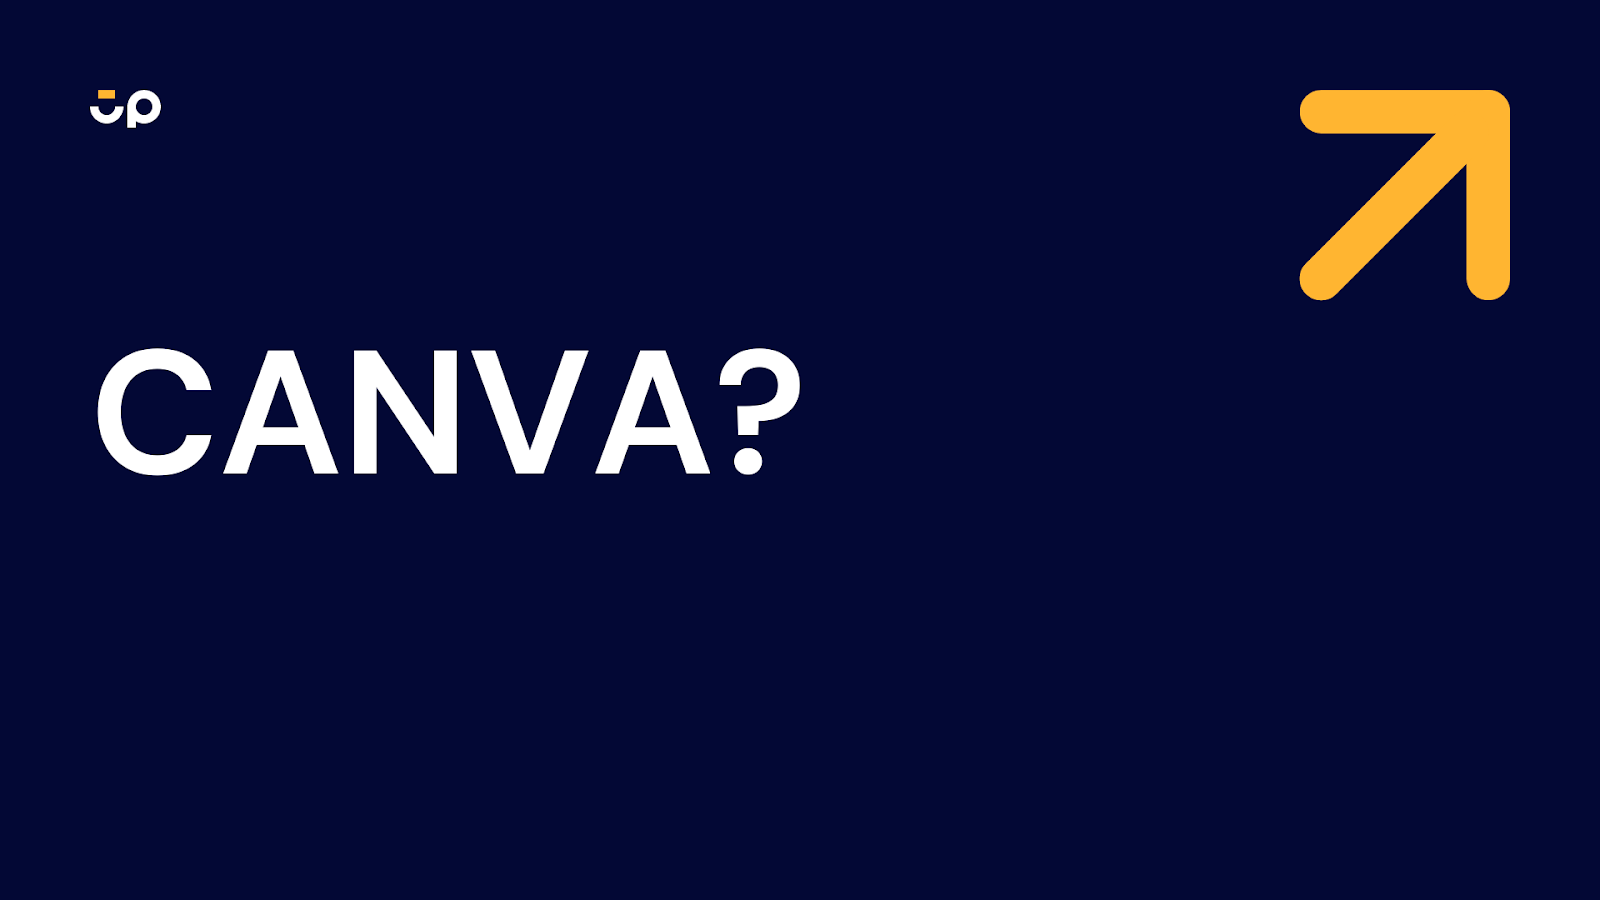 Apa itu Canva?